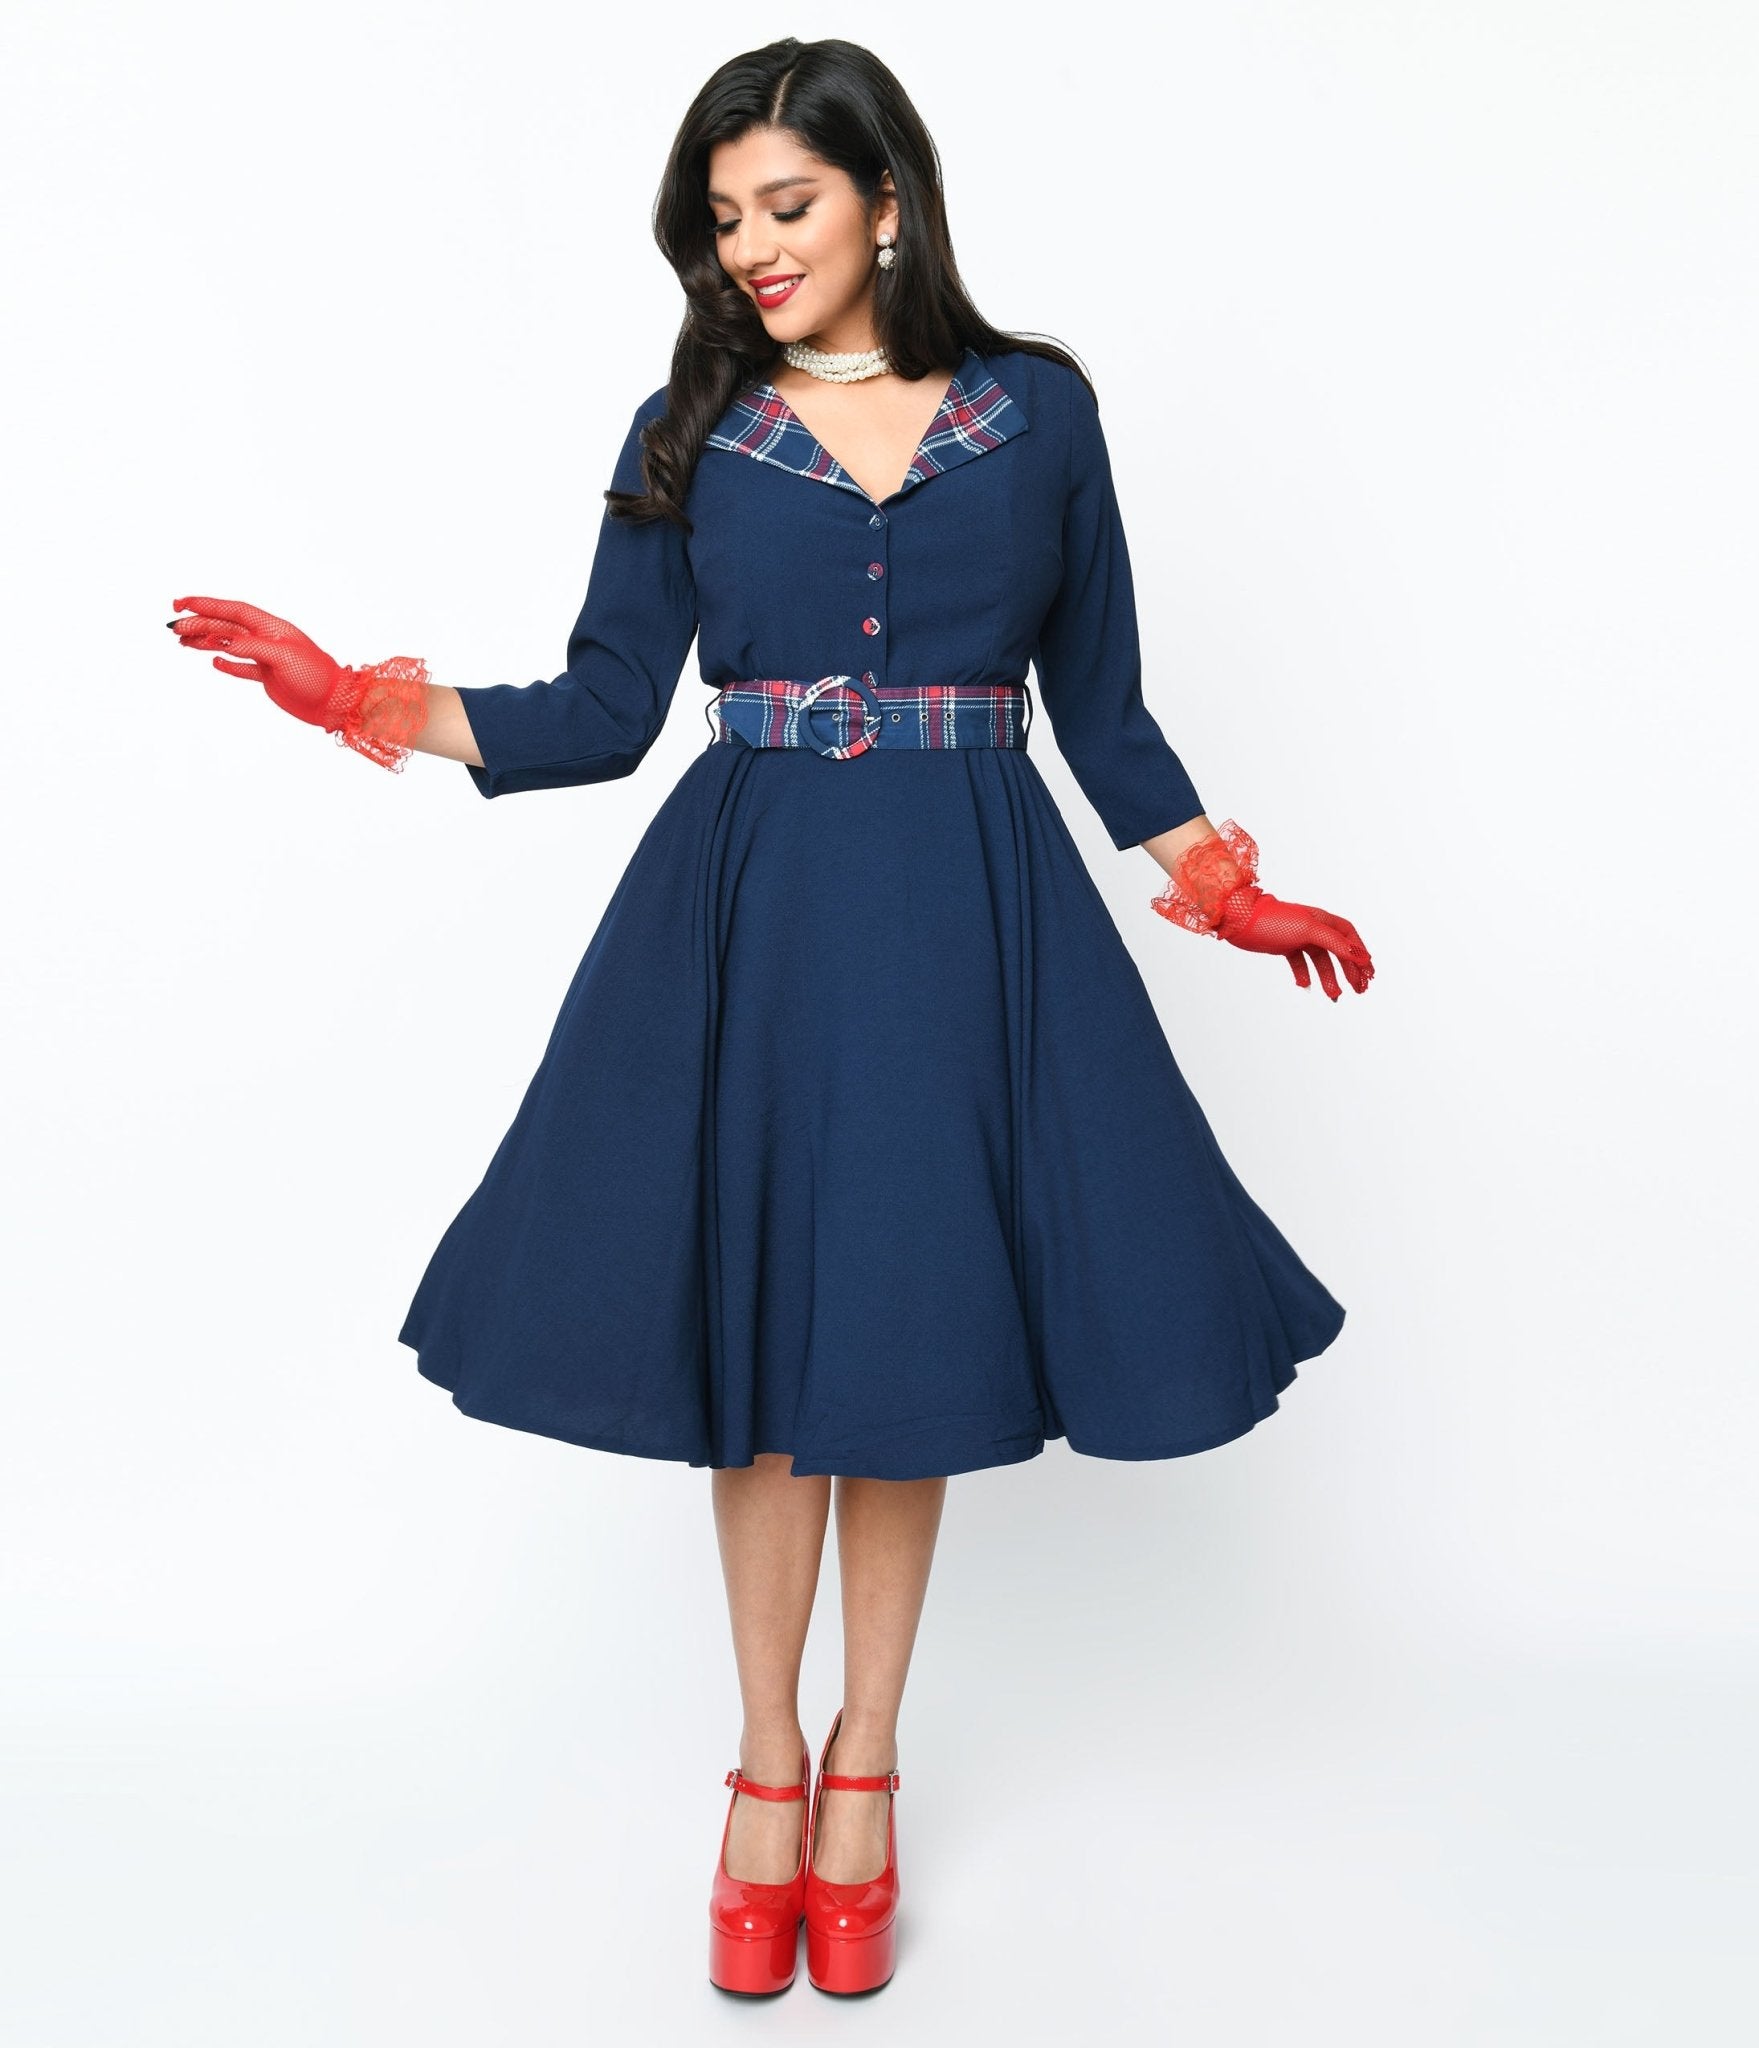 1950s Swing Dresses | 50s Swing Dress Navy  Plaid Contrast Lynette Swing Dress $106.00 AT vintagedancer.com